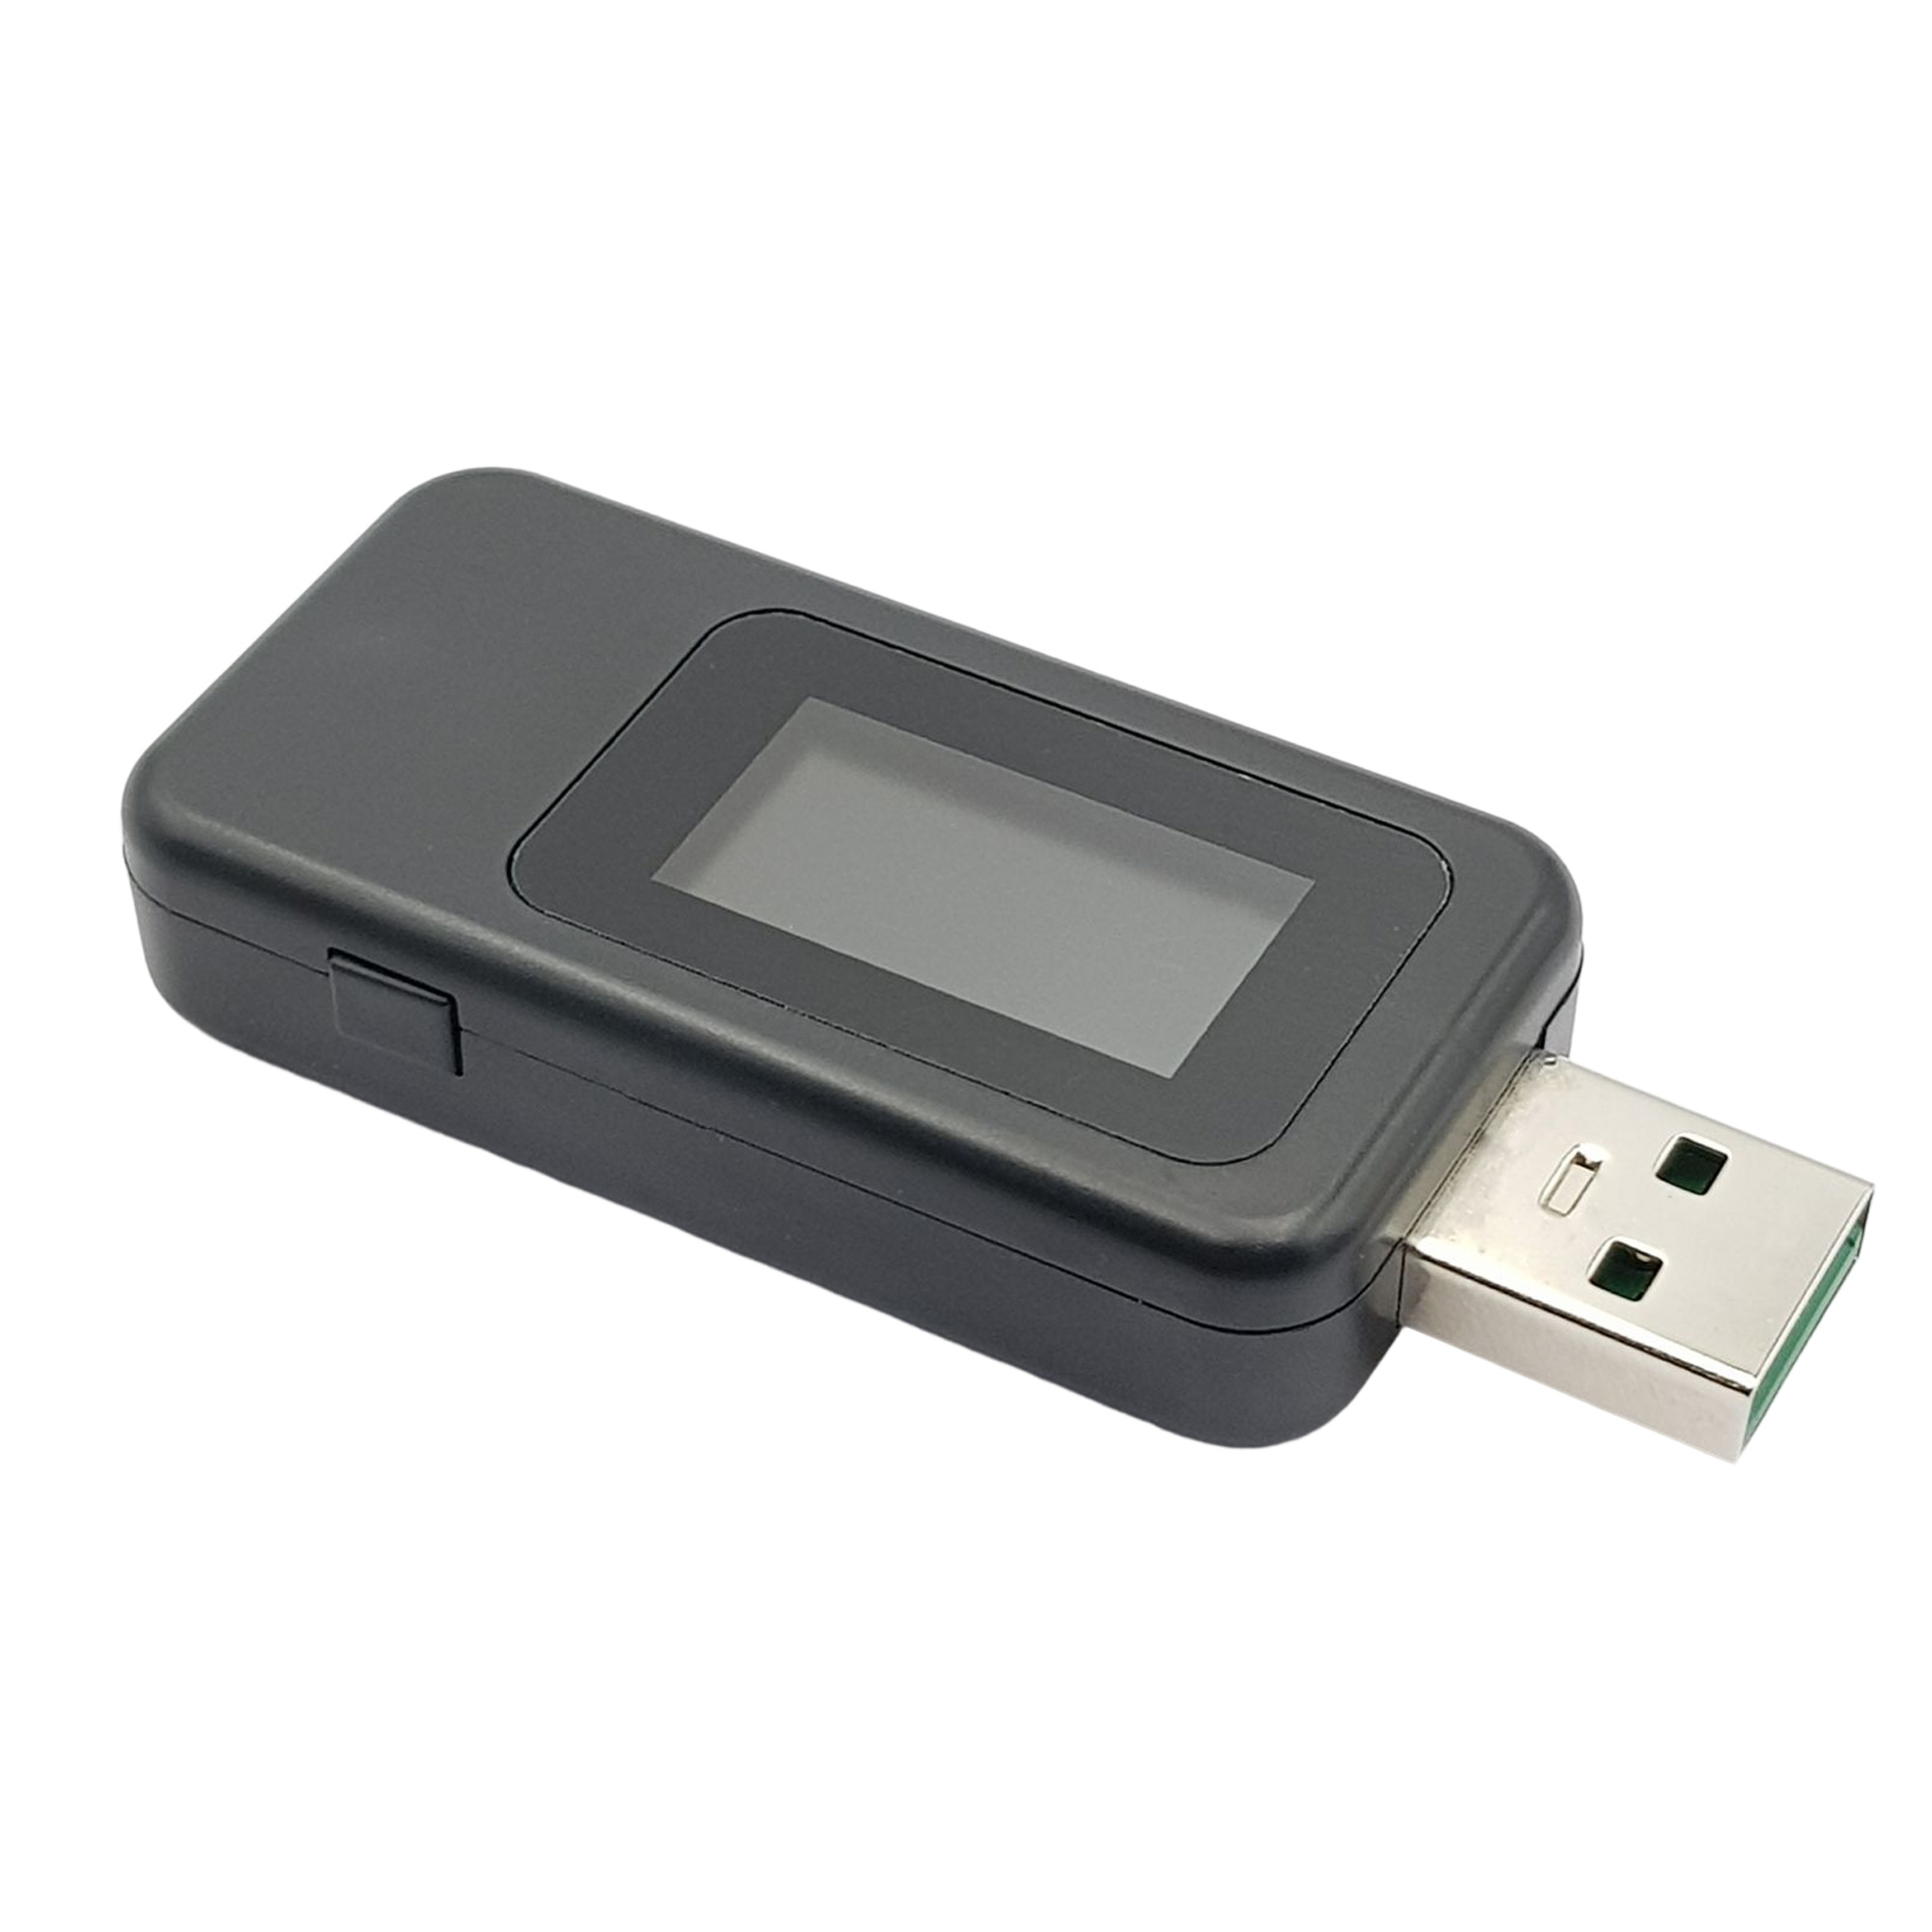 USB Tester kiểm tra đa năng KWS-MX18L